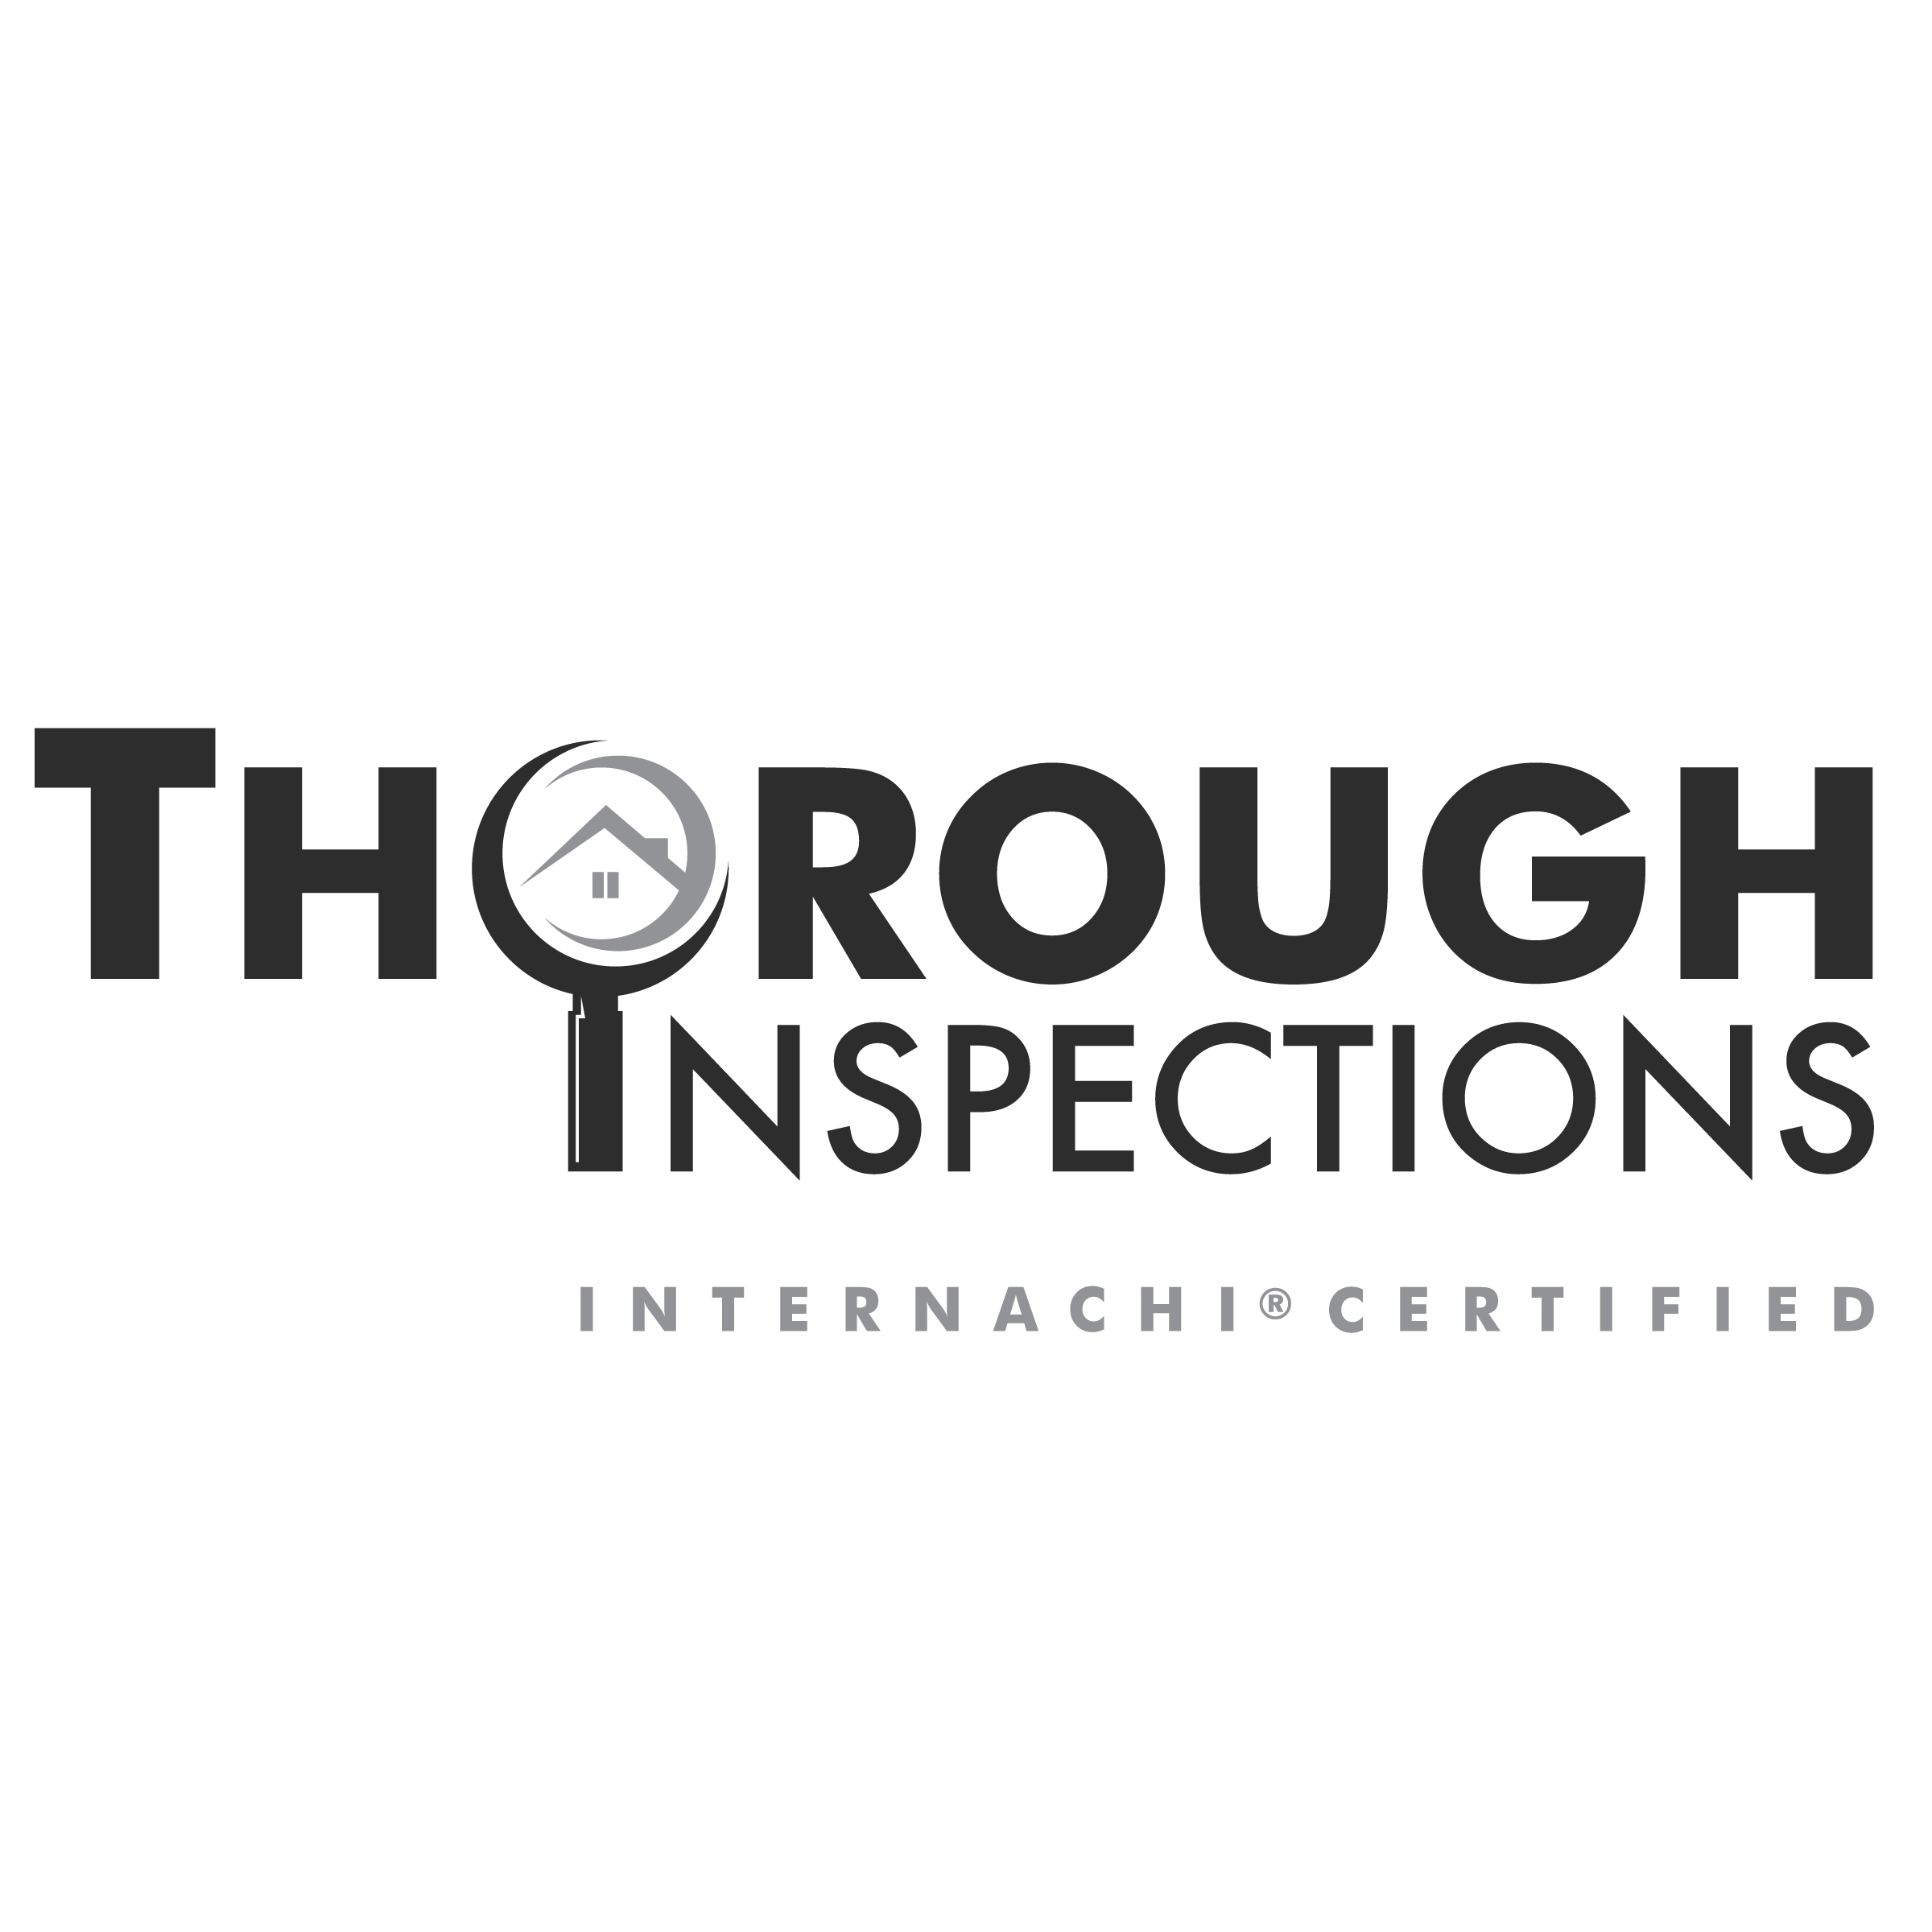 Thorough Inspections, LLC Logo